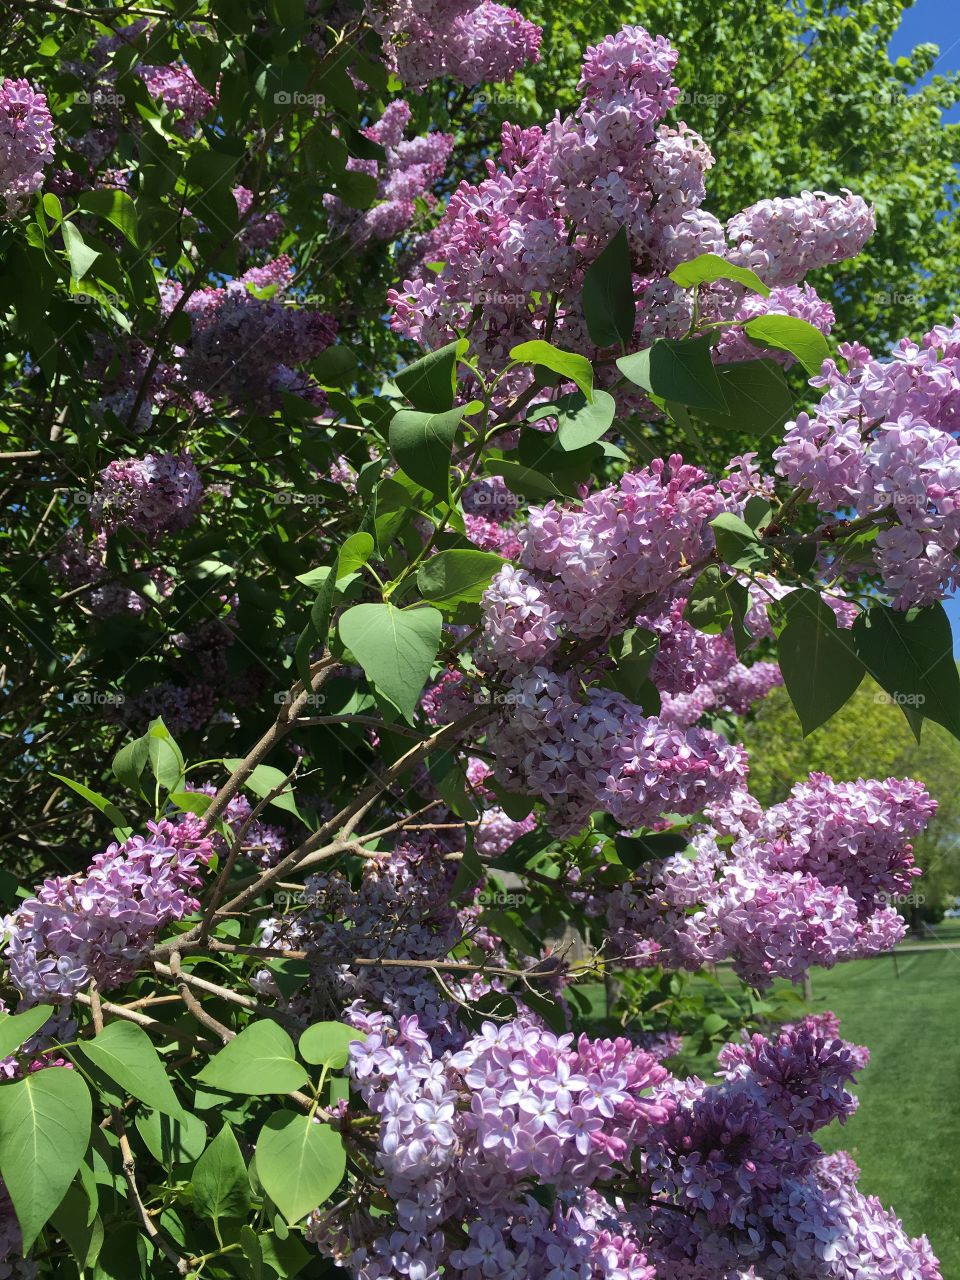 Lilacs in June